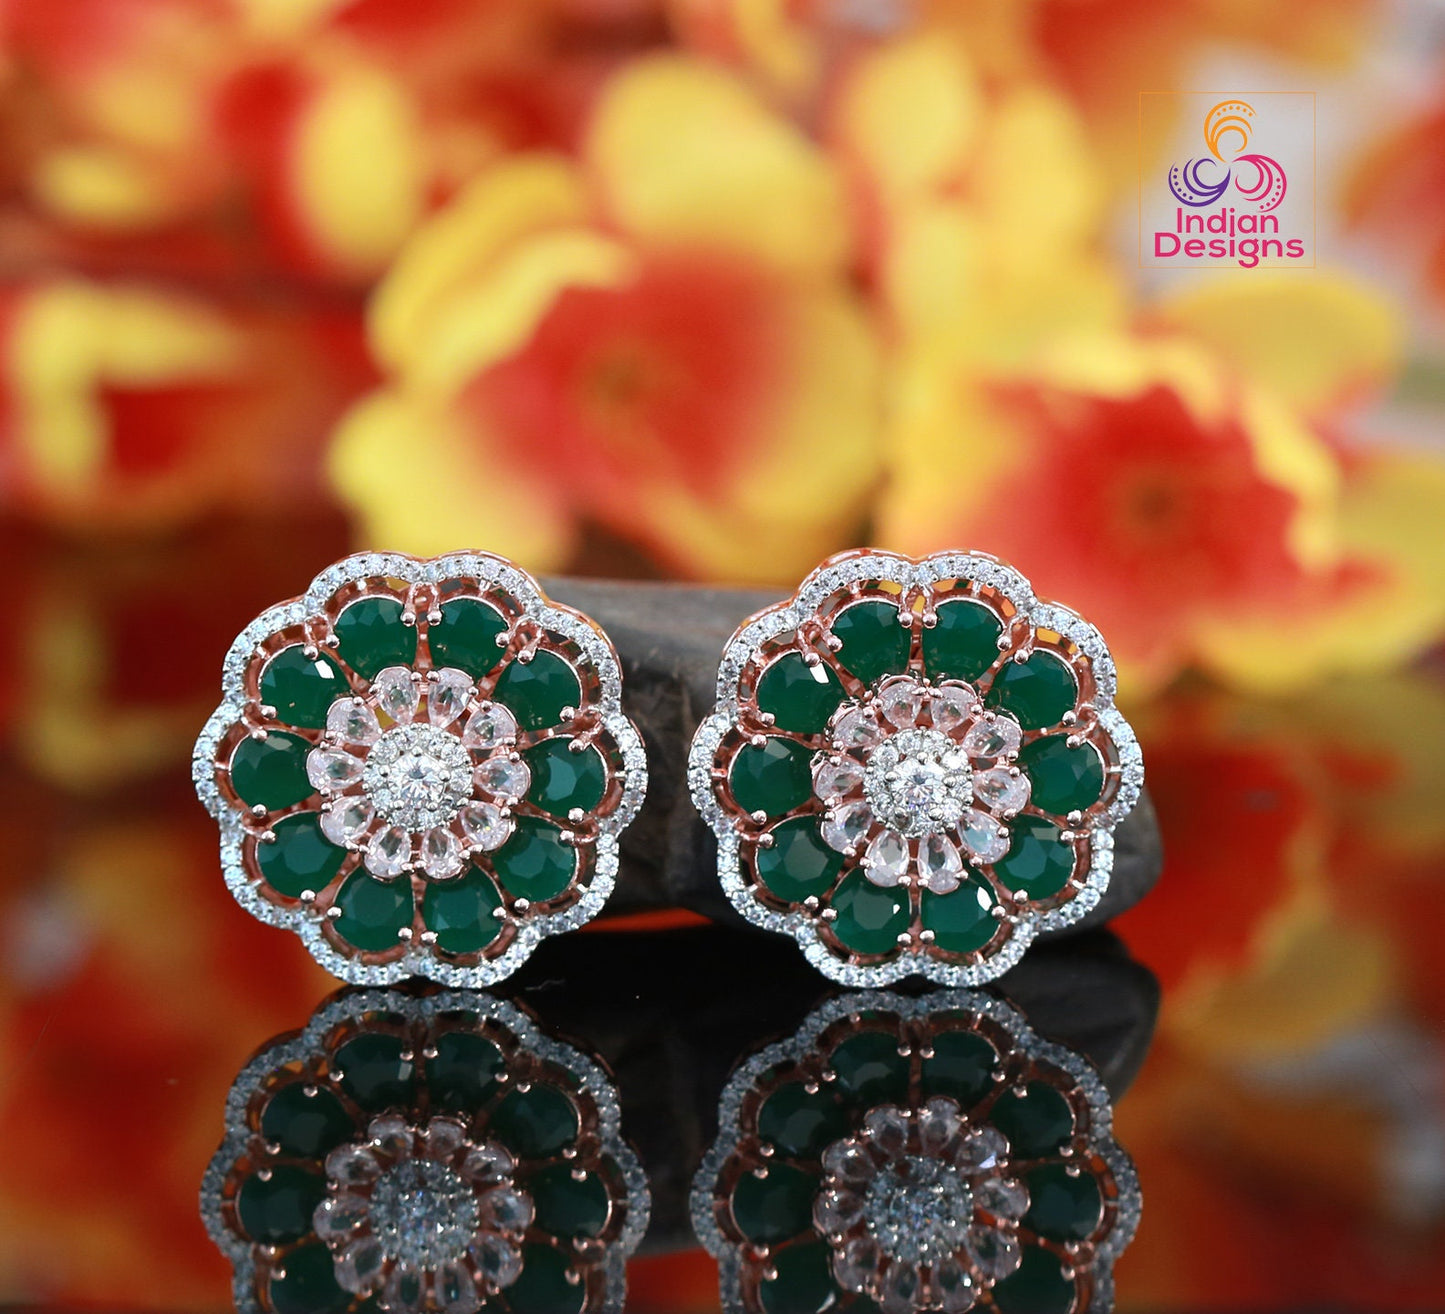 Rose gold large Stud Earrings for Women | Flower stud earrings Indian Designs | Indian Bollywood Party Earrings | Pakistani Stud Earrings